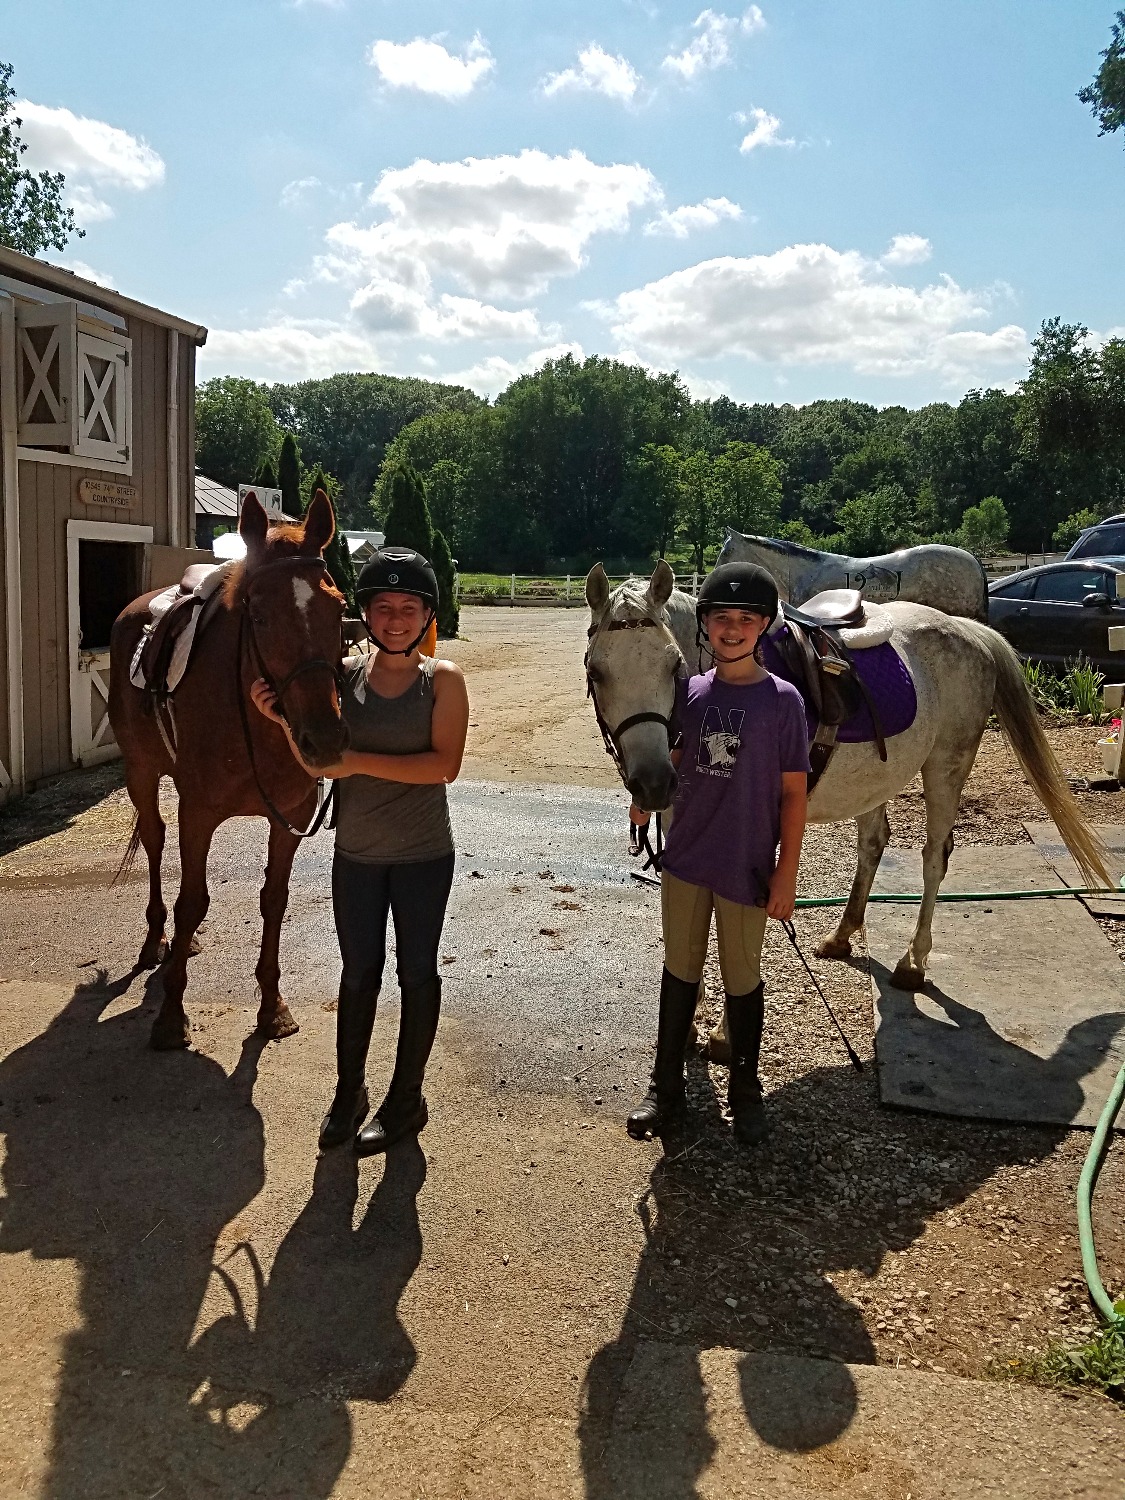 Two girls standing beside horses.